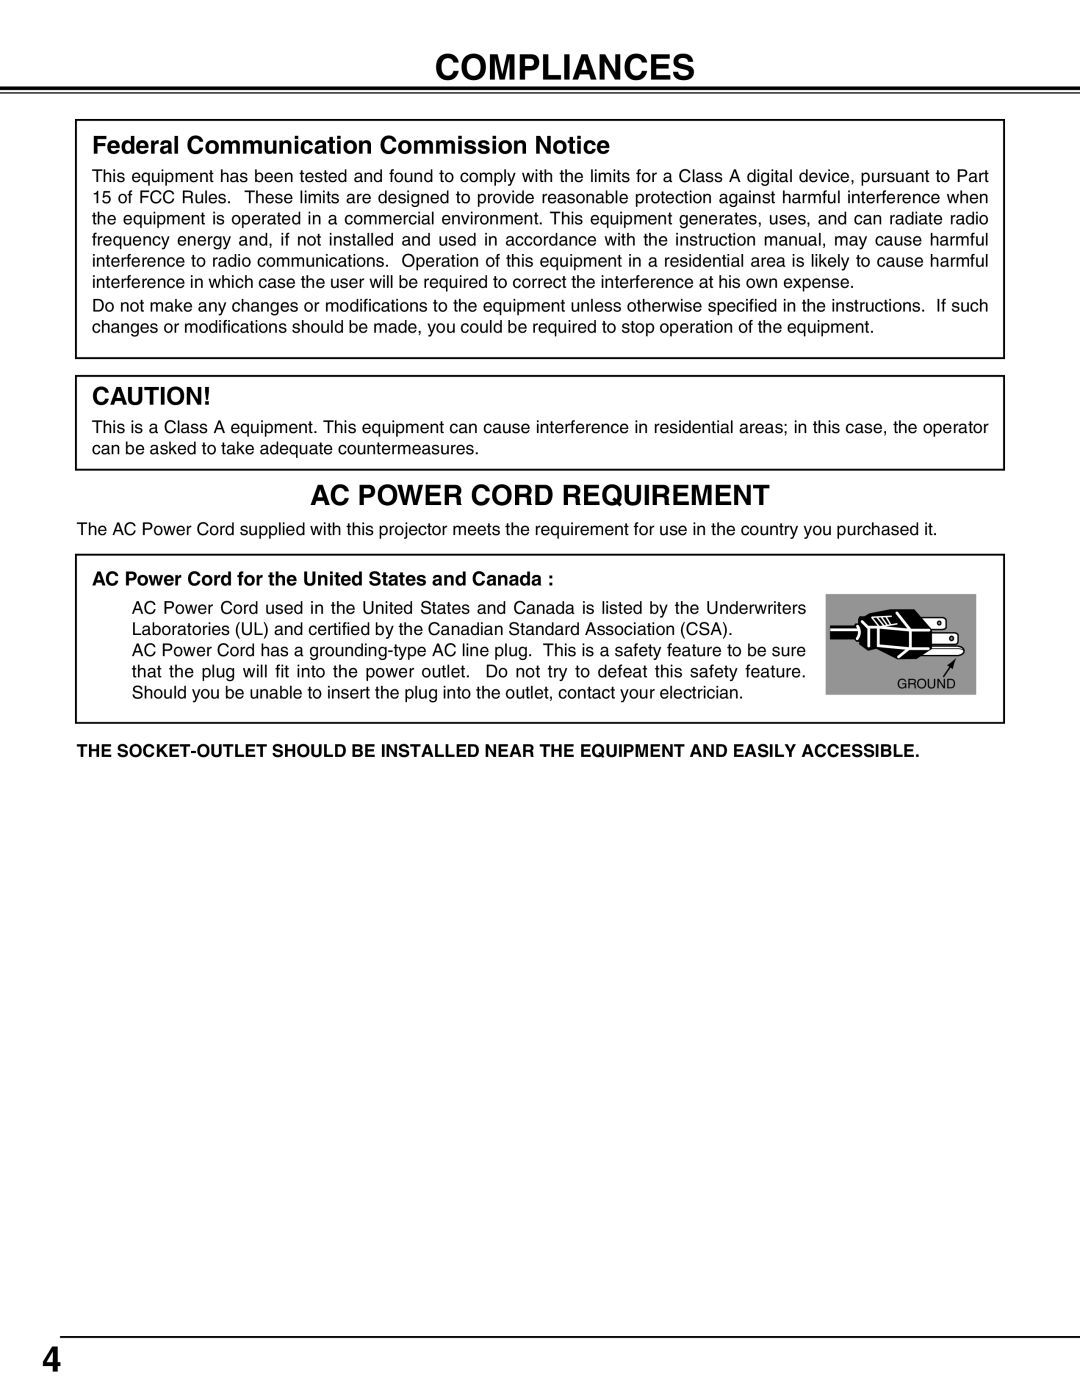 Christie Digital Systems 38-VIV302-01 Compliances, Ac Power Cord Requirement, Federal Communication Commission Notice 